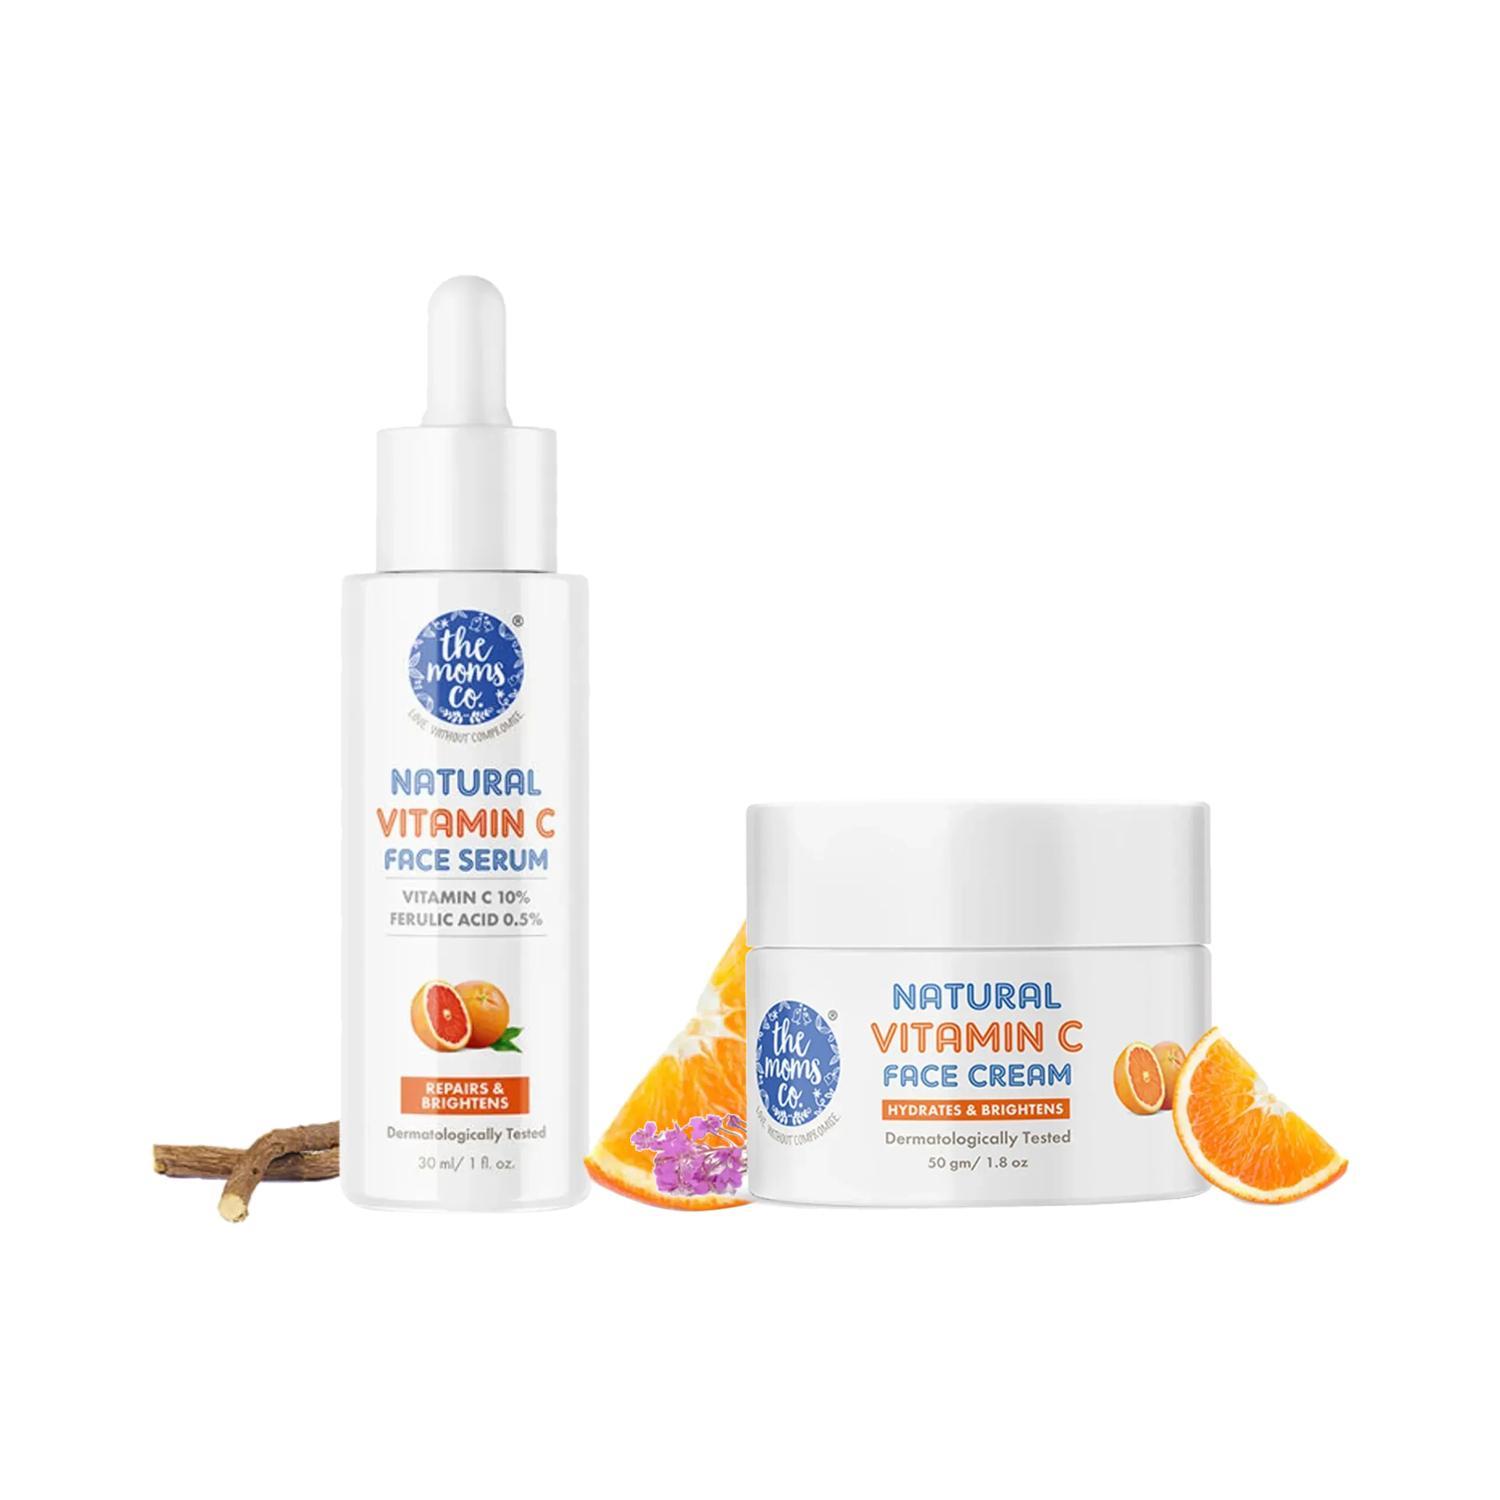 the moms co. natural vitamin c face cream (50g) & natural vitamin c face serum (30ml) combo